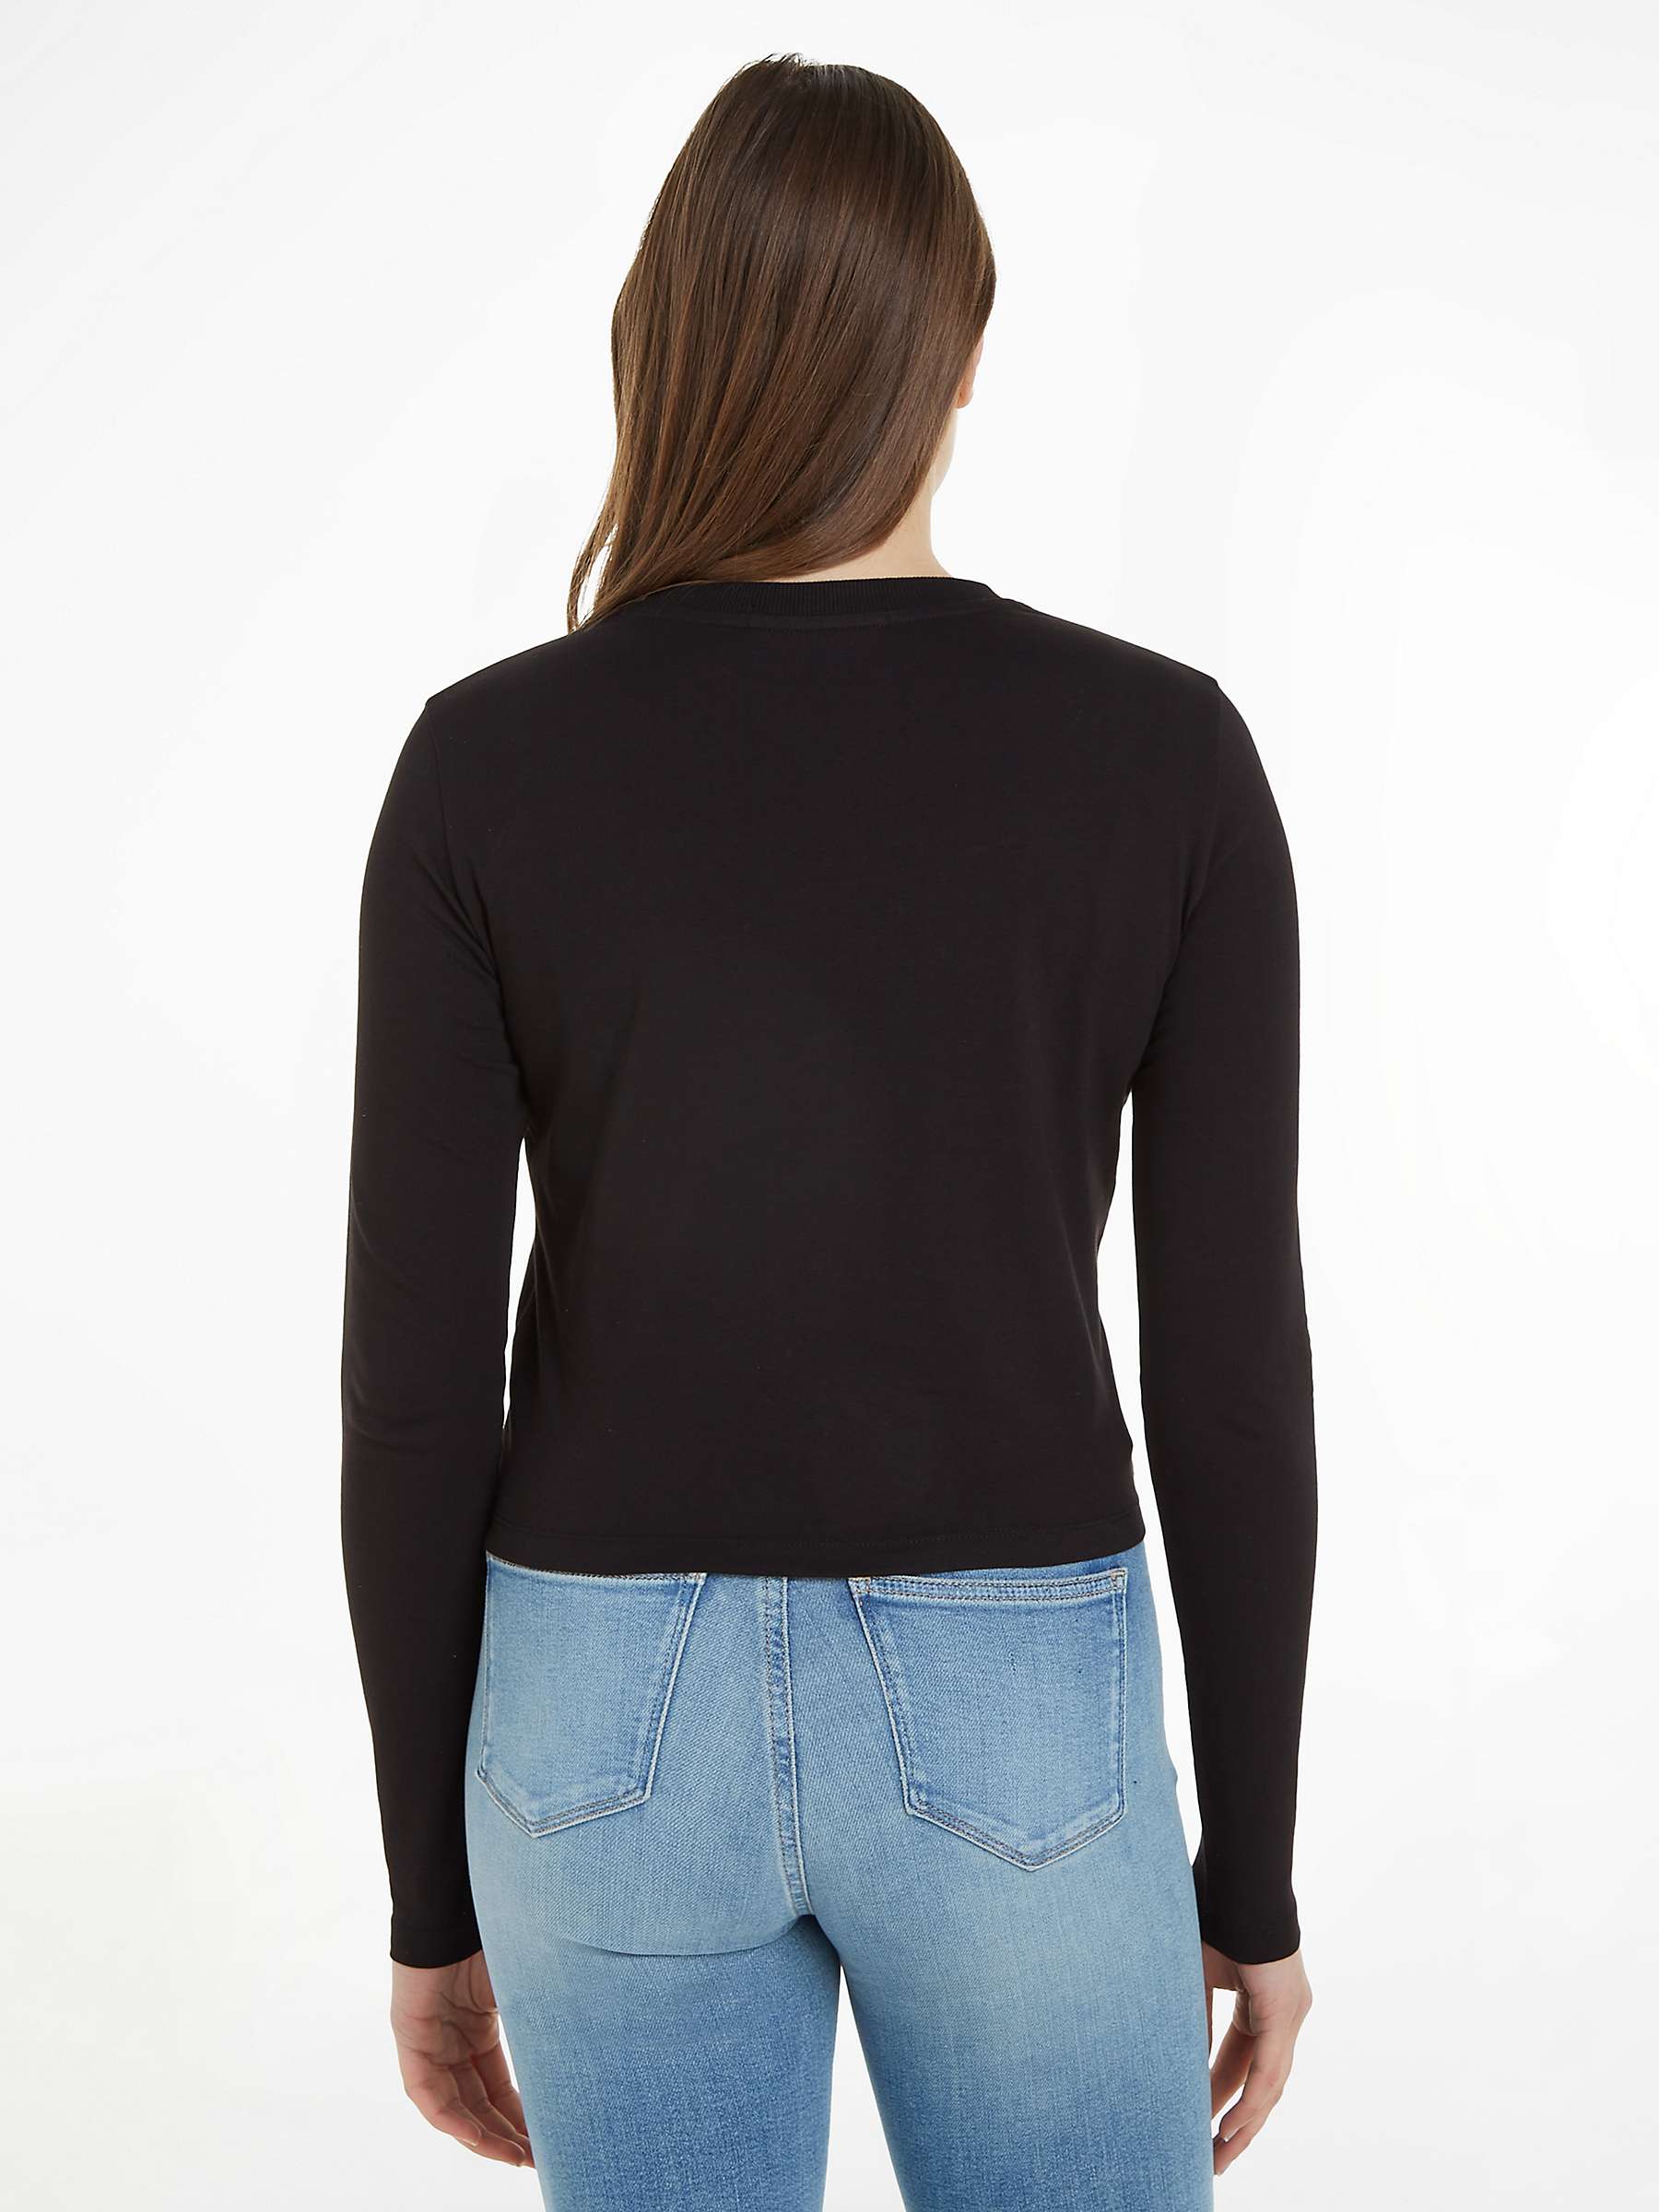 Buy Calvin Klein Embroidered Logo Long Sleeve T-Shirt, CK Black Online at johnlewis.com